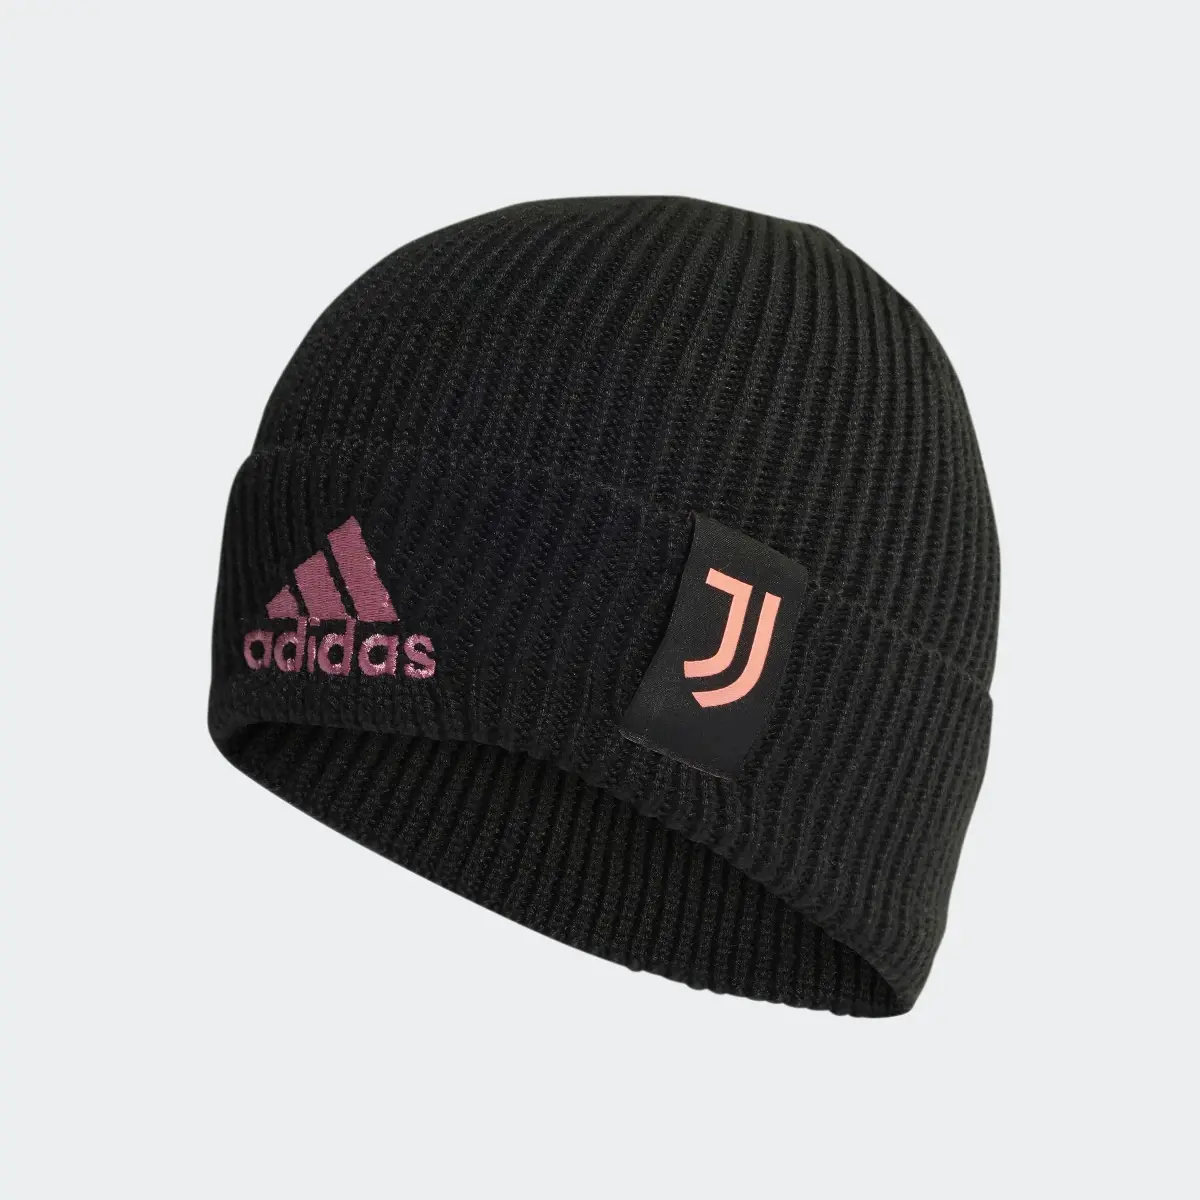 Adidas Juventus Beanie. 2